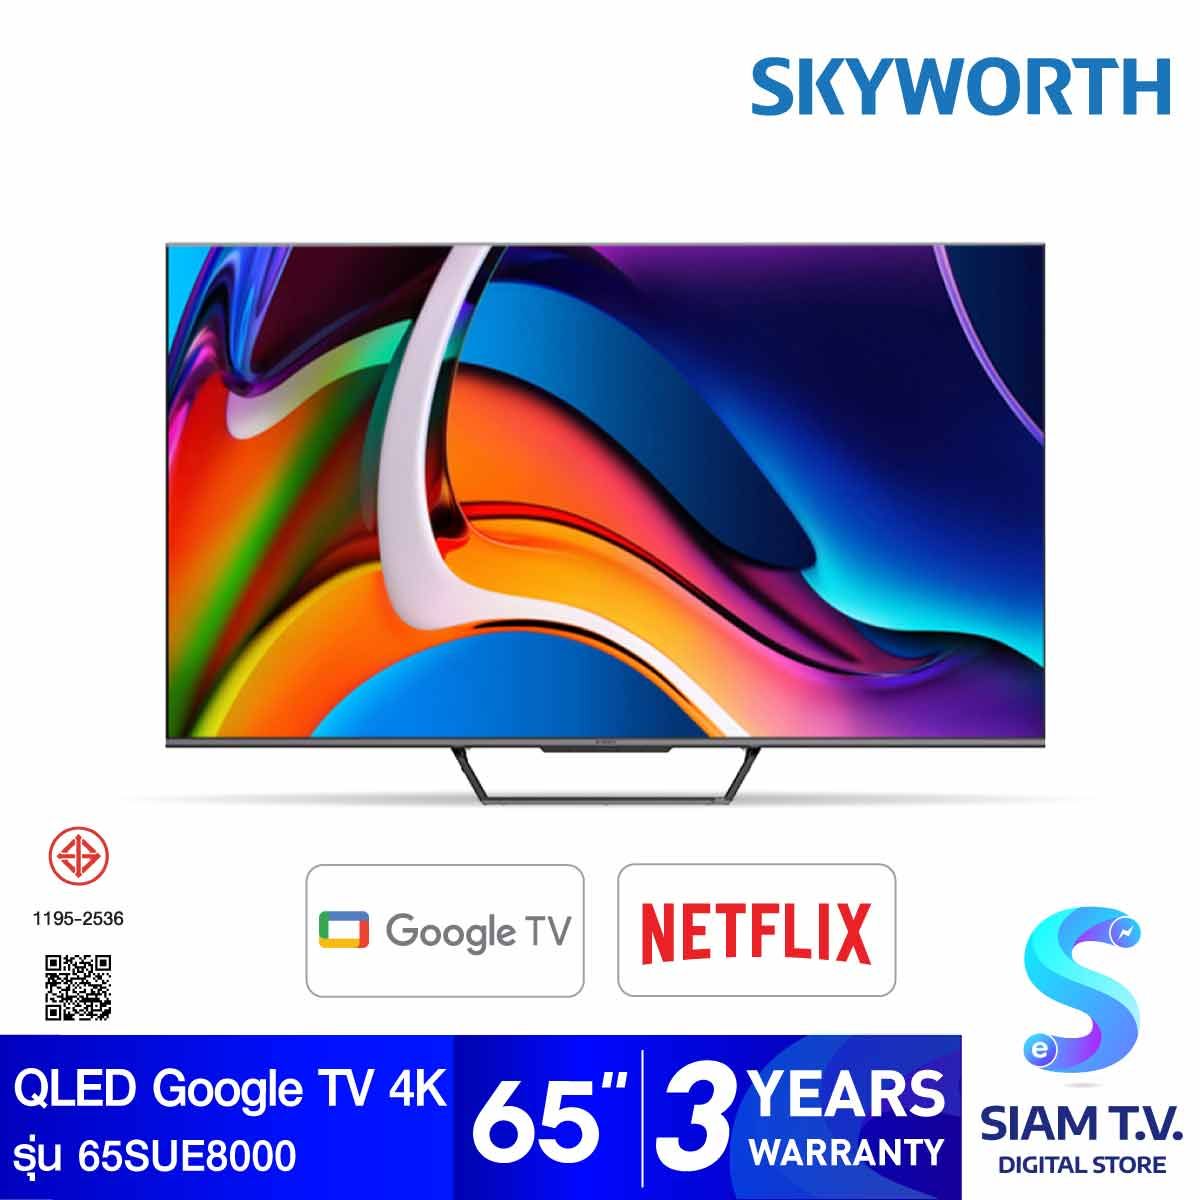 SKYWORTH QLED TV  Google TV 4K รุ่น 65SUE8000 สมาร์ททีวี ขนาด 65 นิ้ว